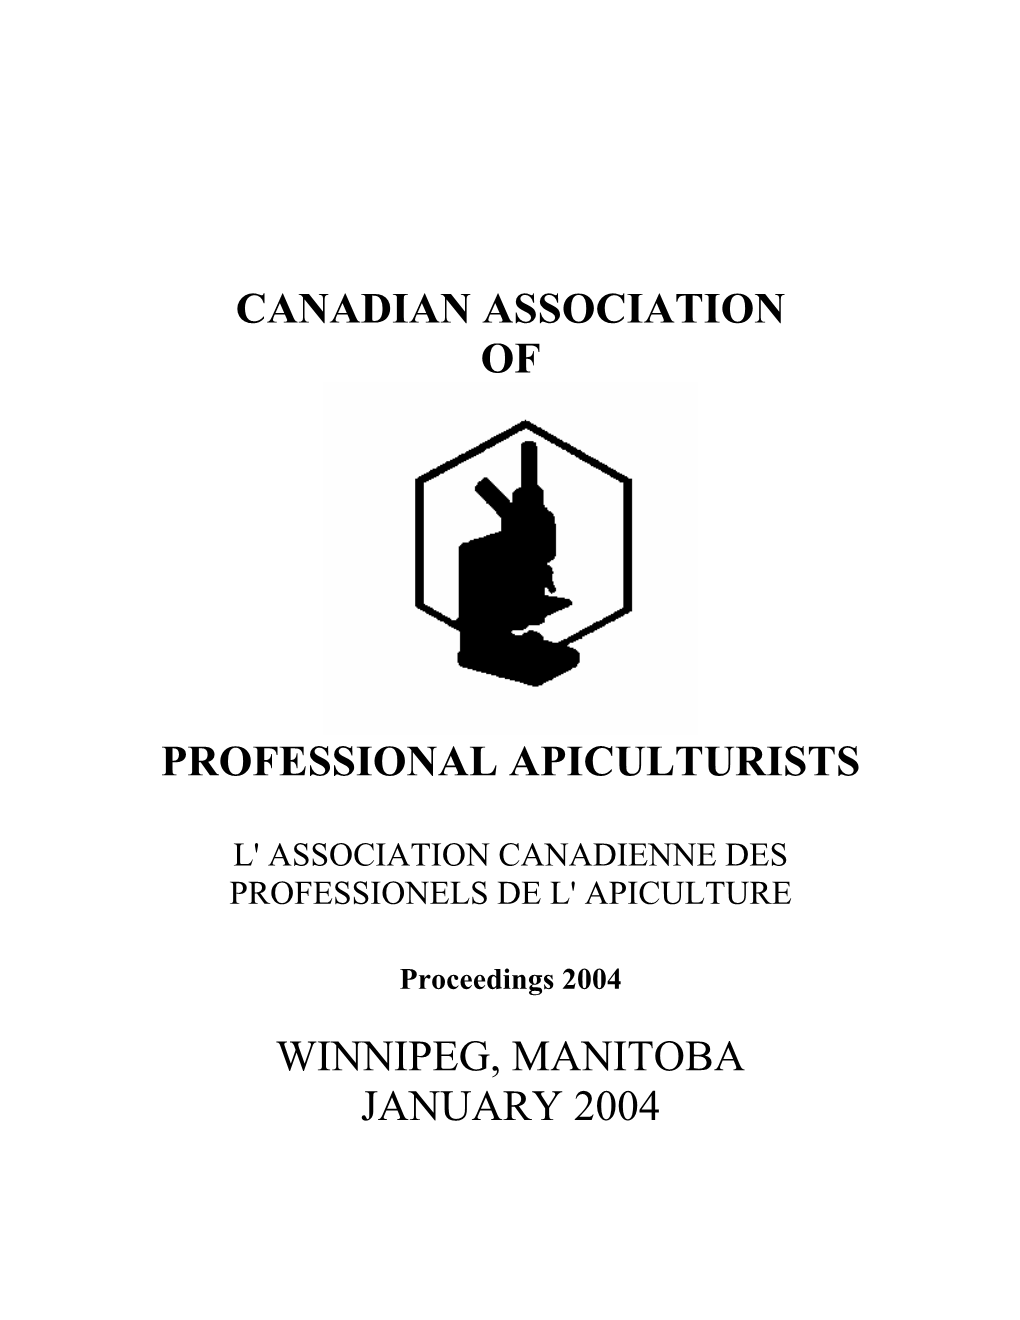 Canadian Association of Professional Apiculturists Annual Meeting Winnipeg, Manitoba January 27 - 28, 2004